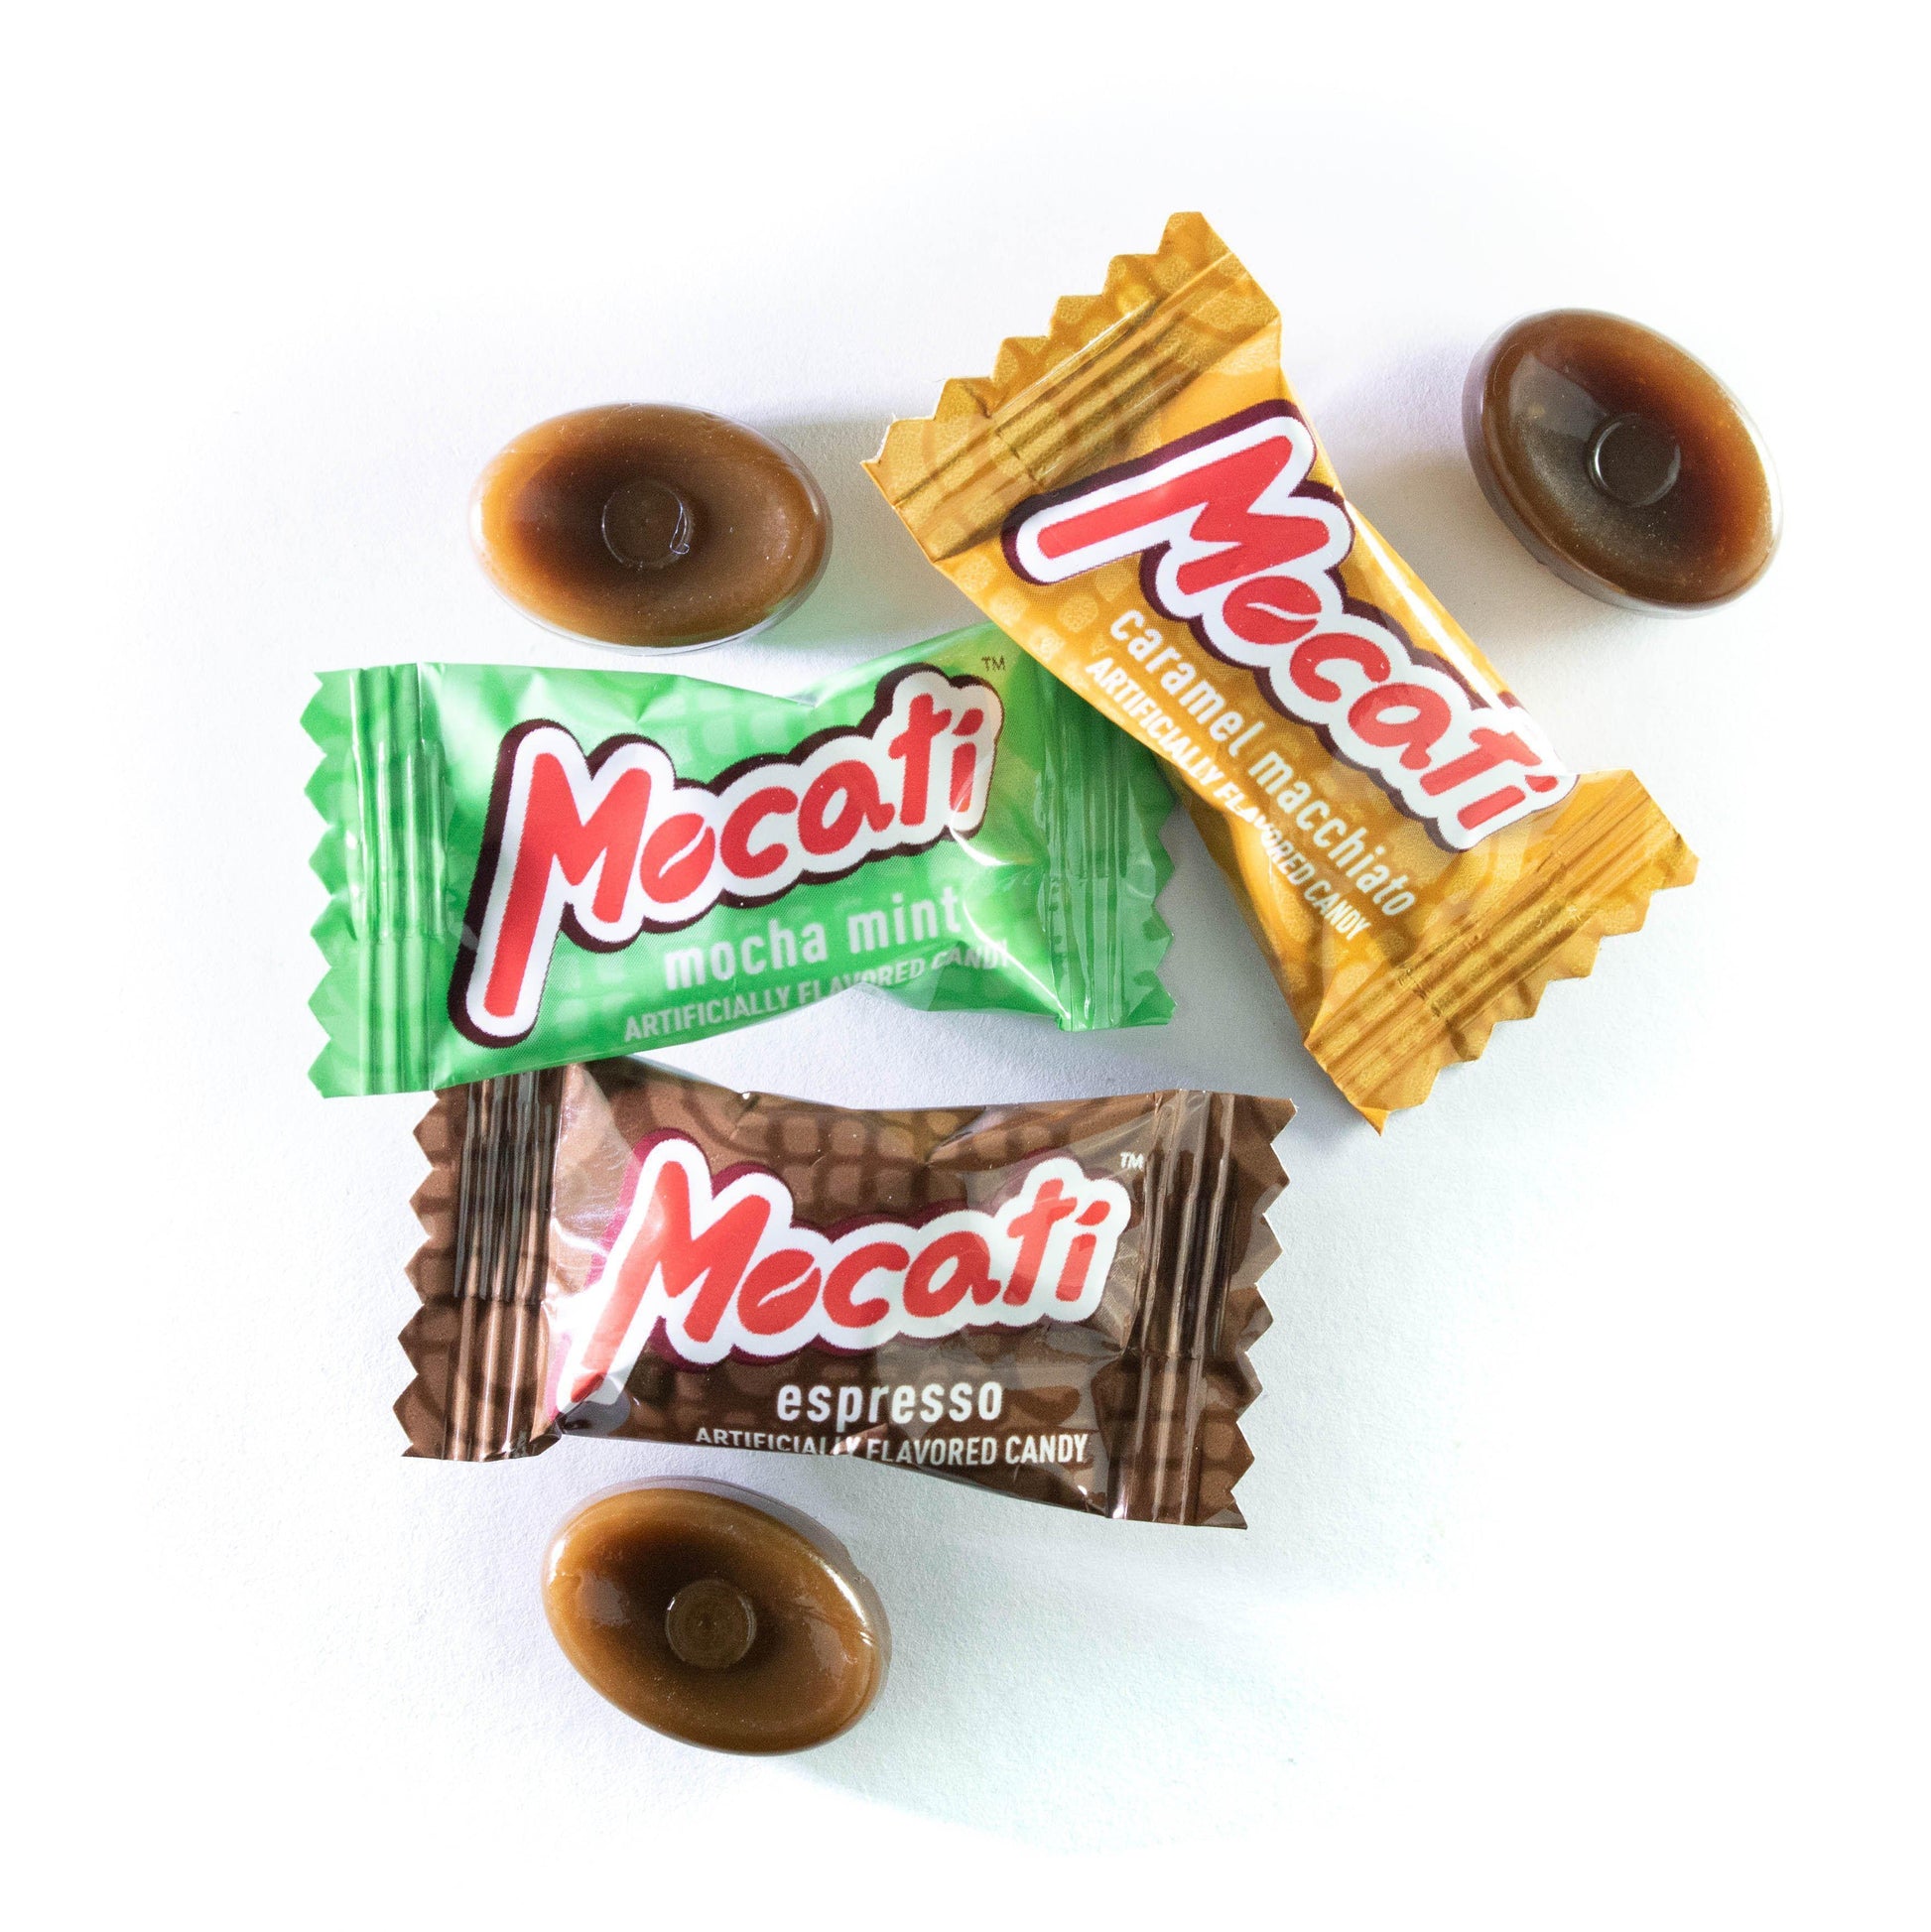 Aprati Mocati Mocha Mint, Caramel Macchiato, and Expresso Hard Candy unwrapped pieces